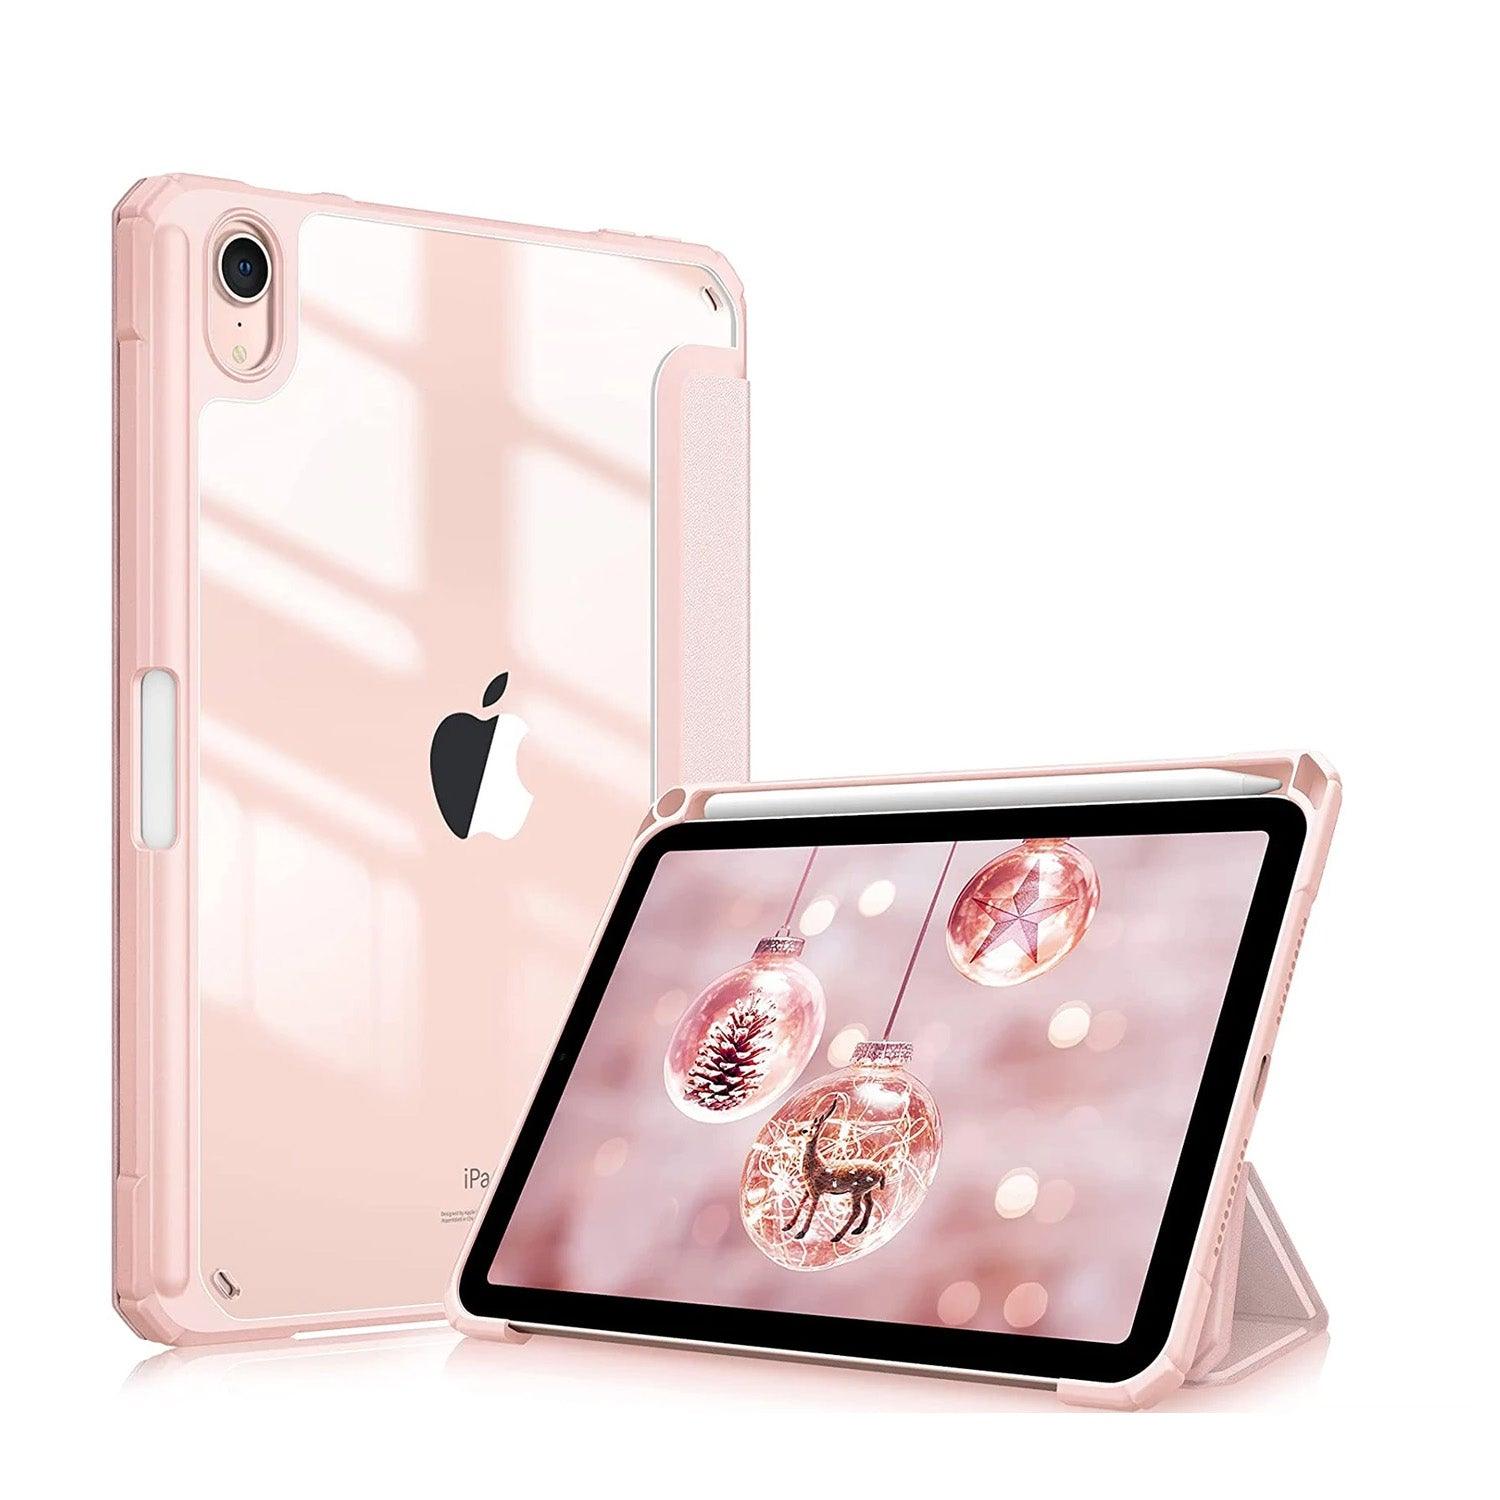 Silicon Case For iPad 7 8 9 10.2 Inch iPad Pro 4 5th Gen 11 Inch